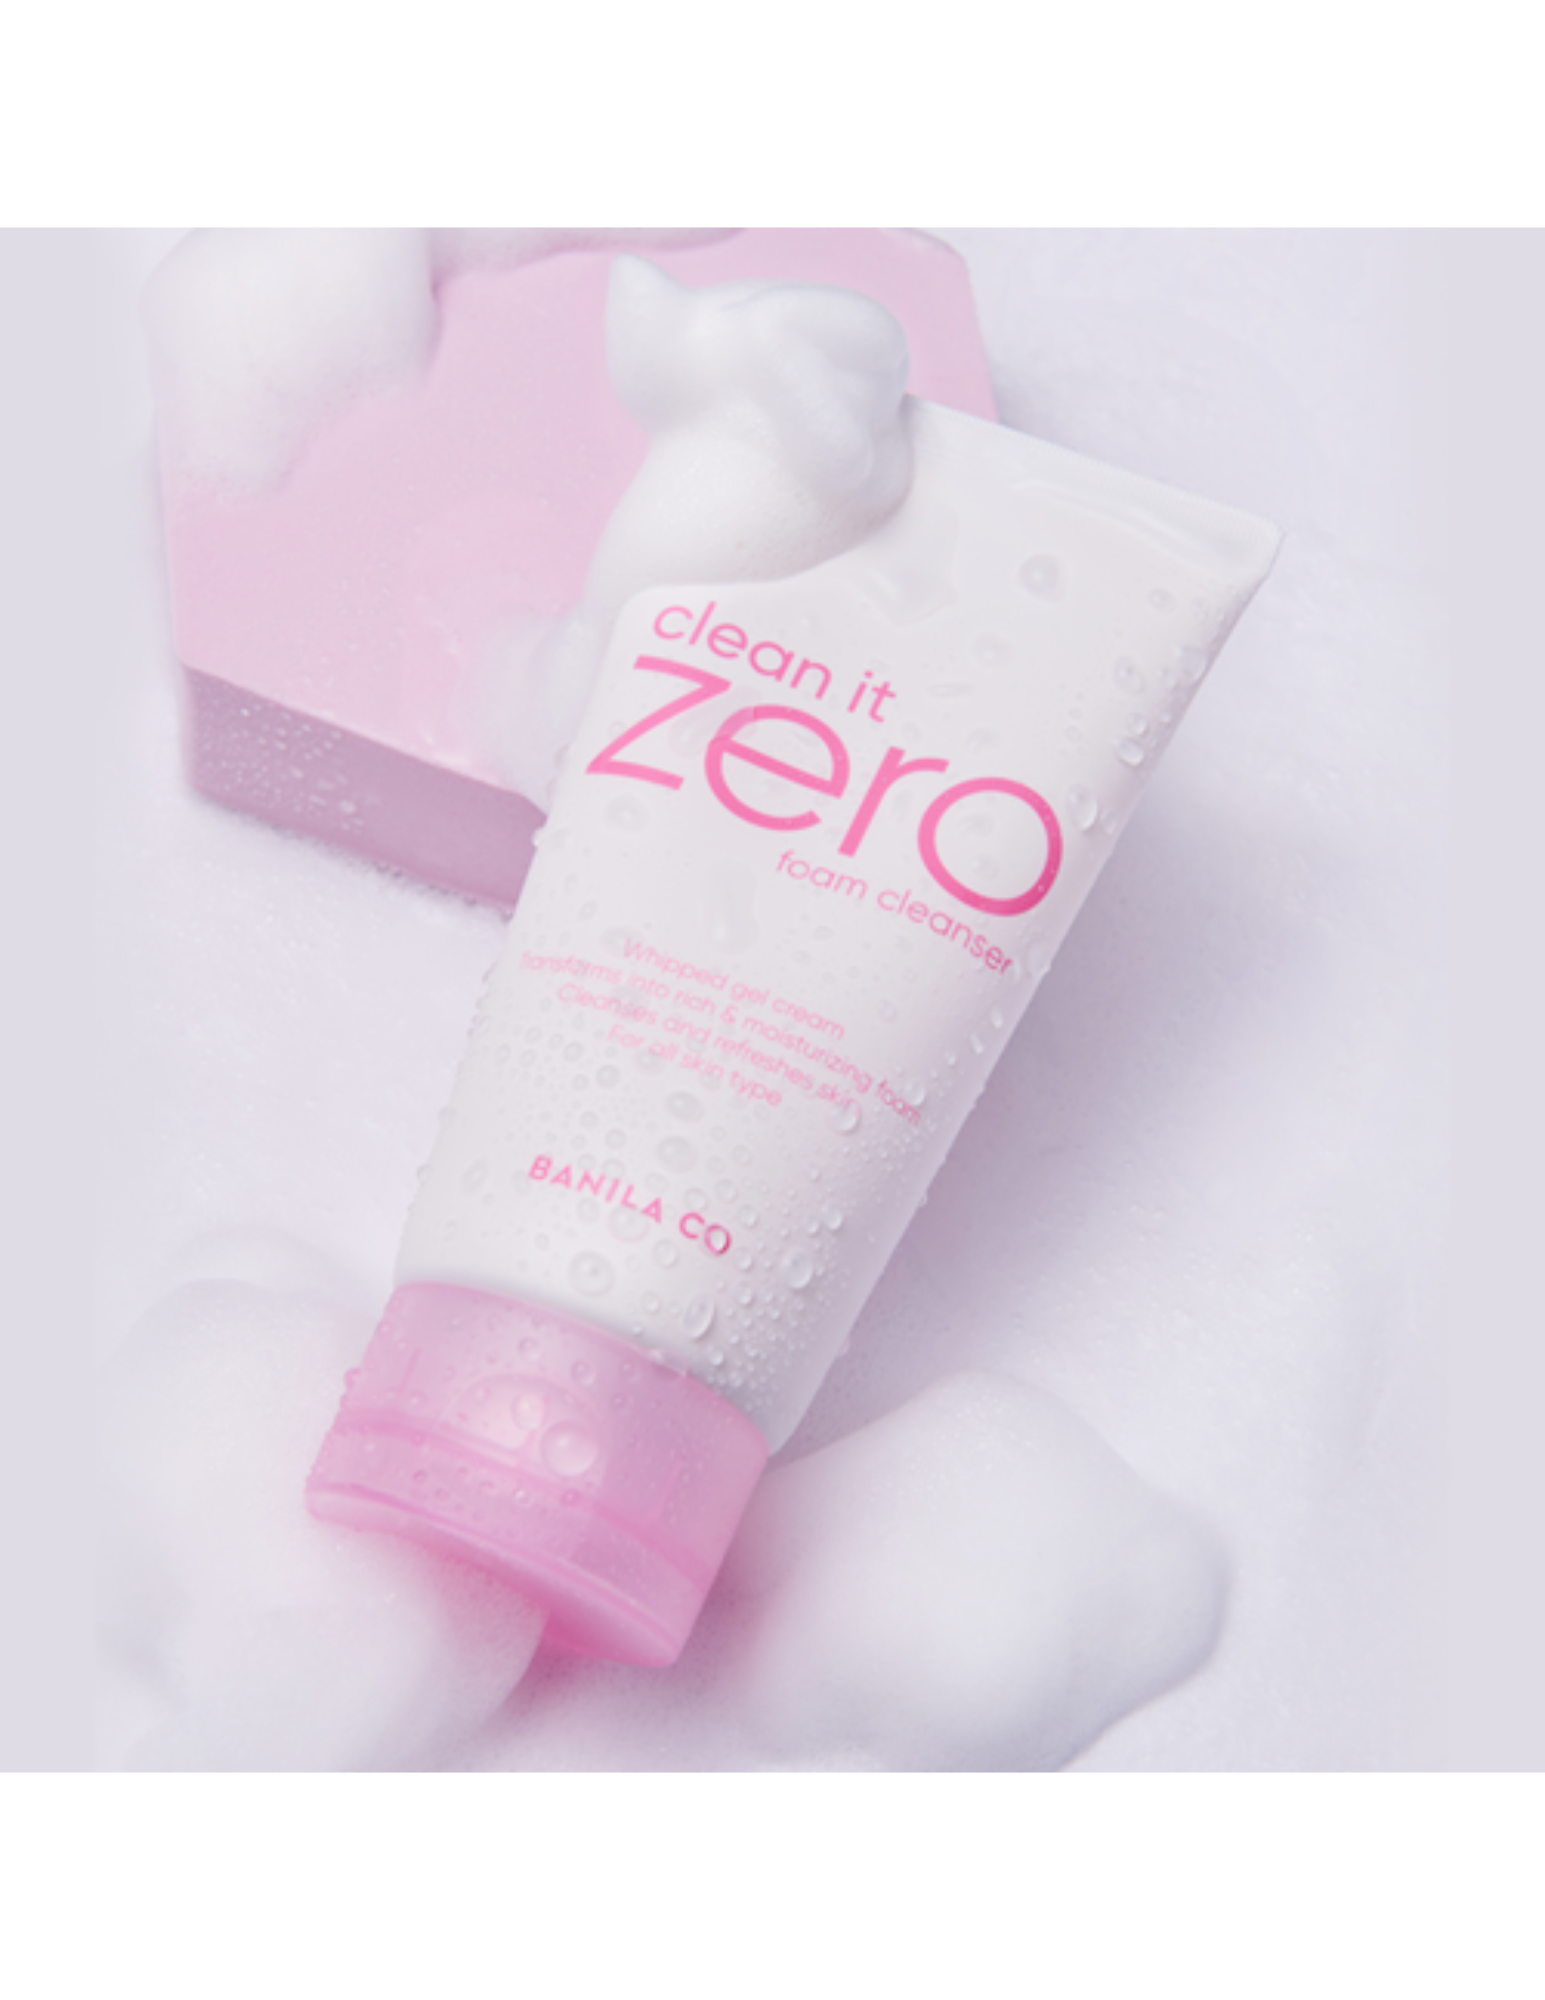 Banila Co Clean It Zero Revitalizing Cleansing Balm & Foam Set